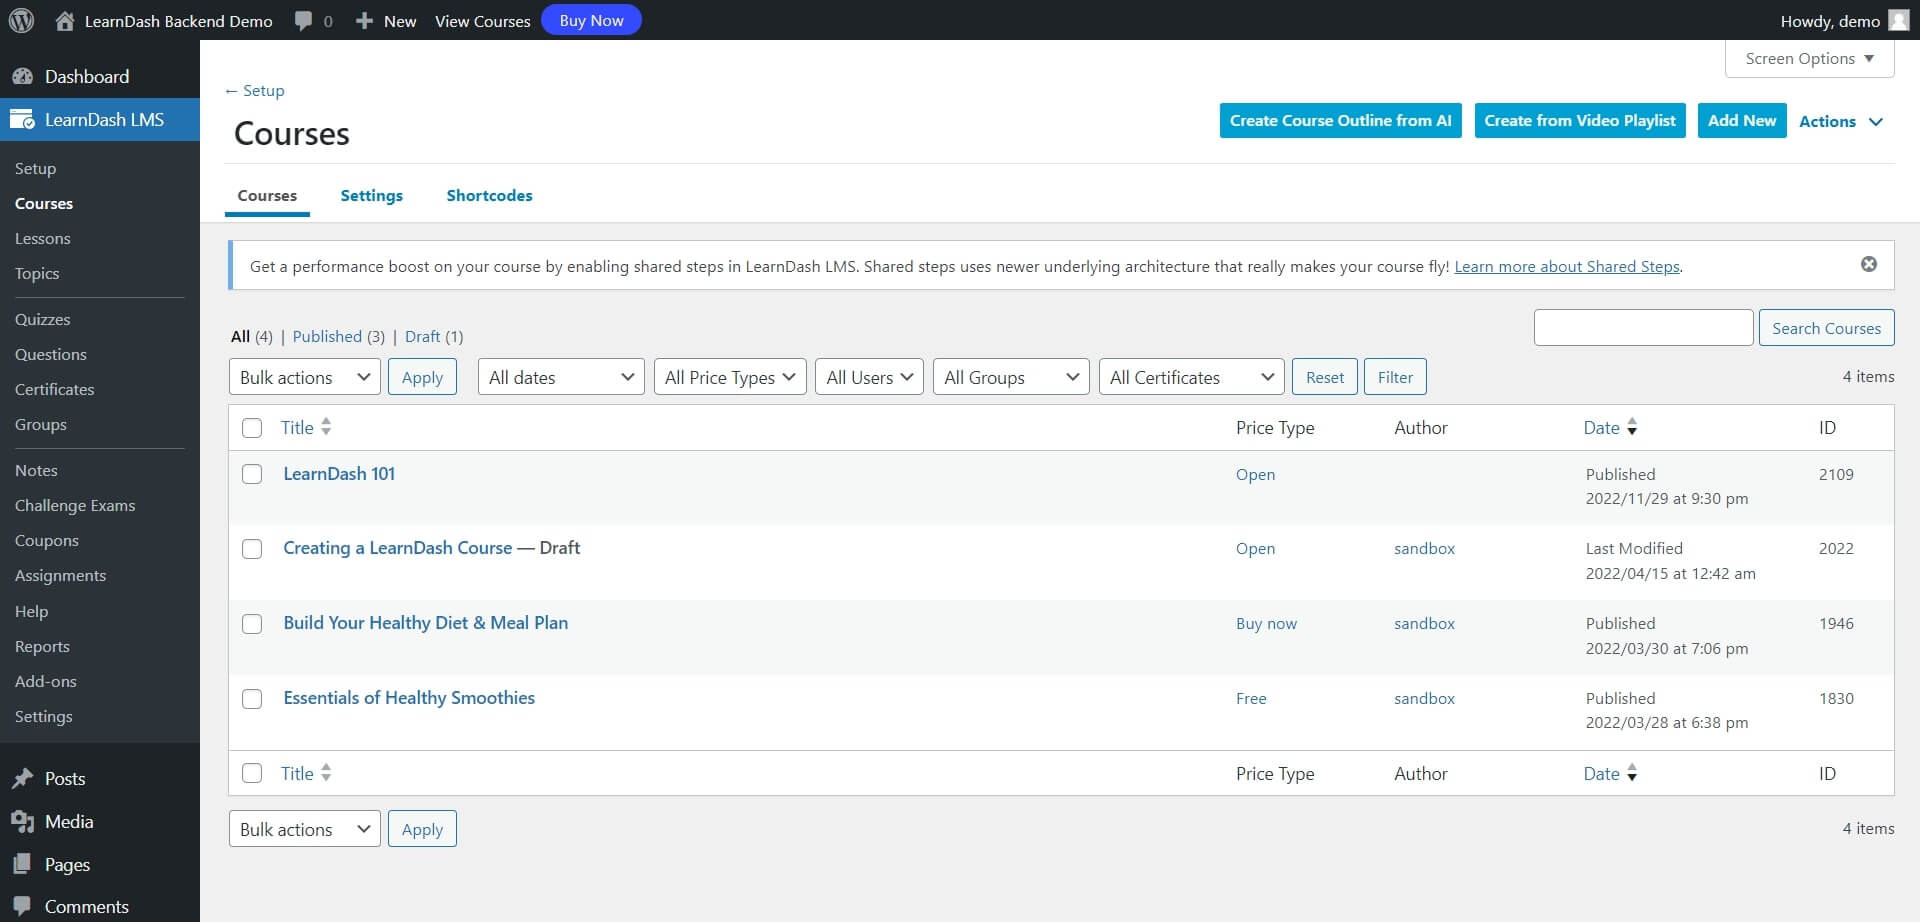  A screenshot showing LearnDash's interface and user dashboard.